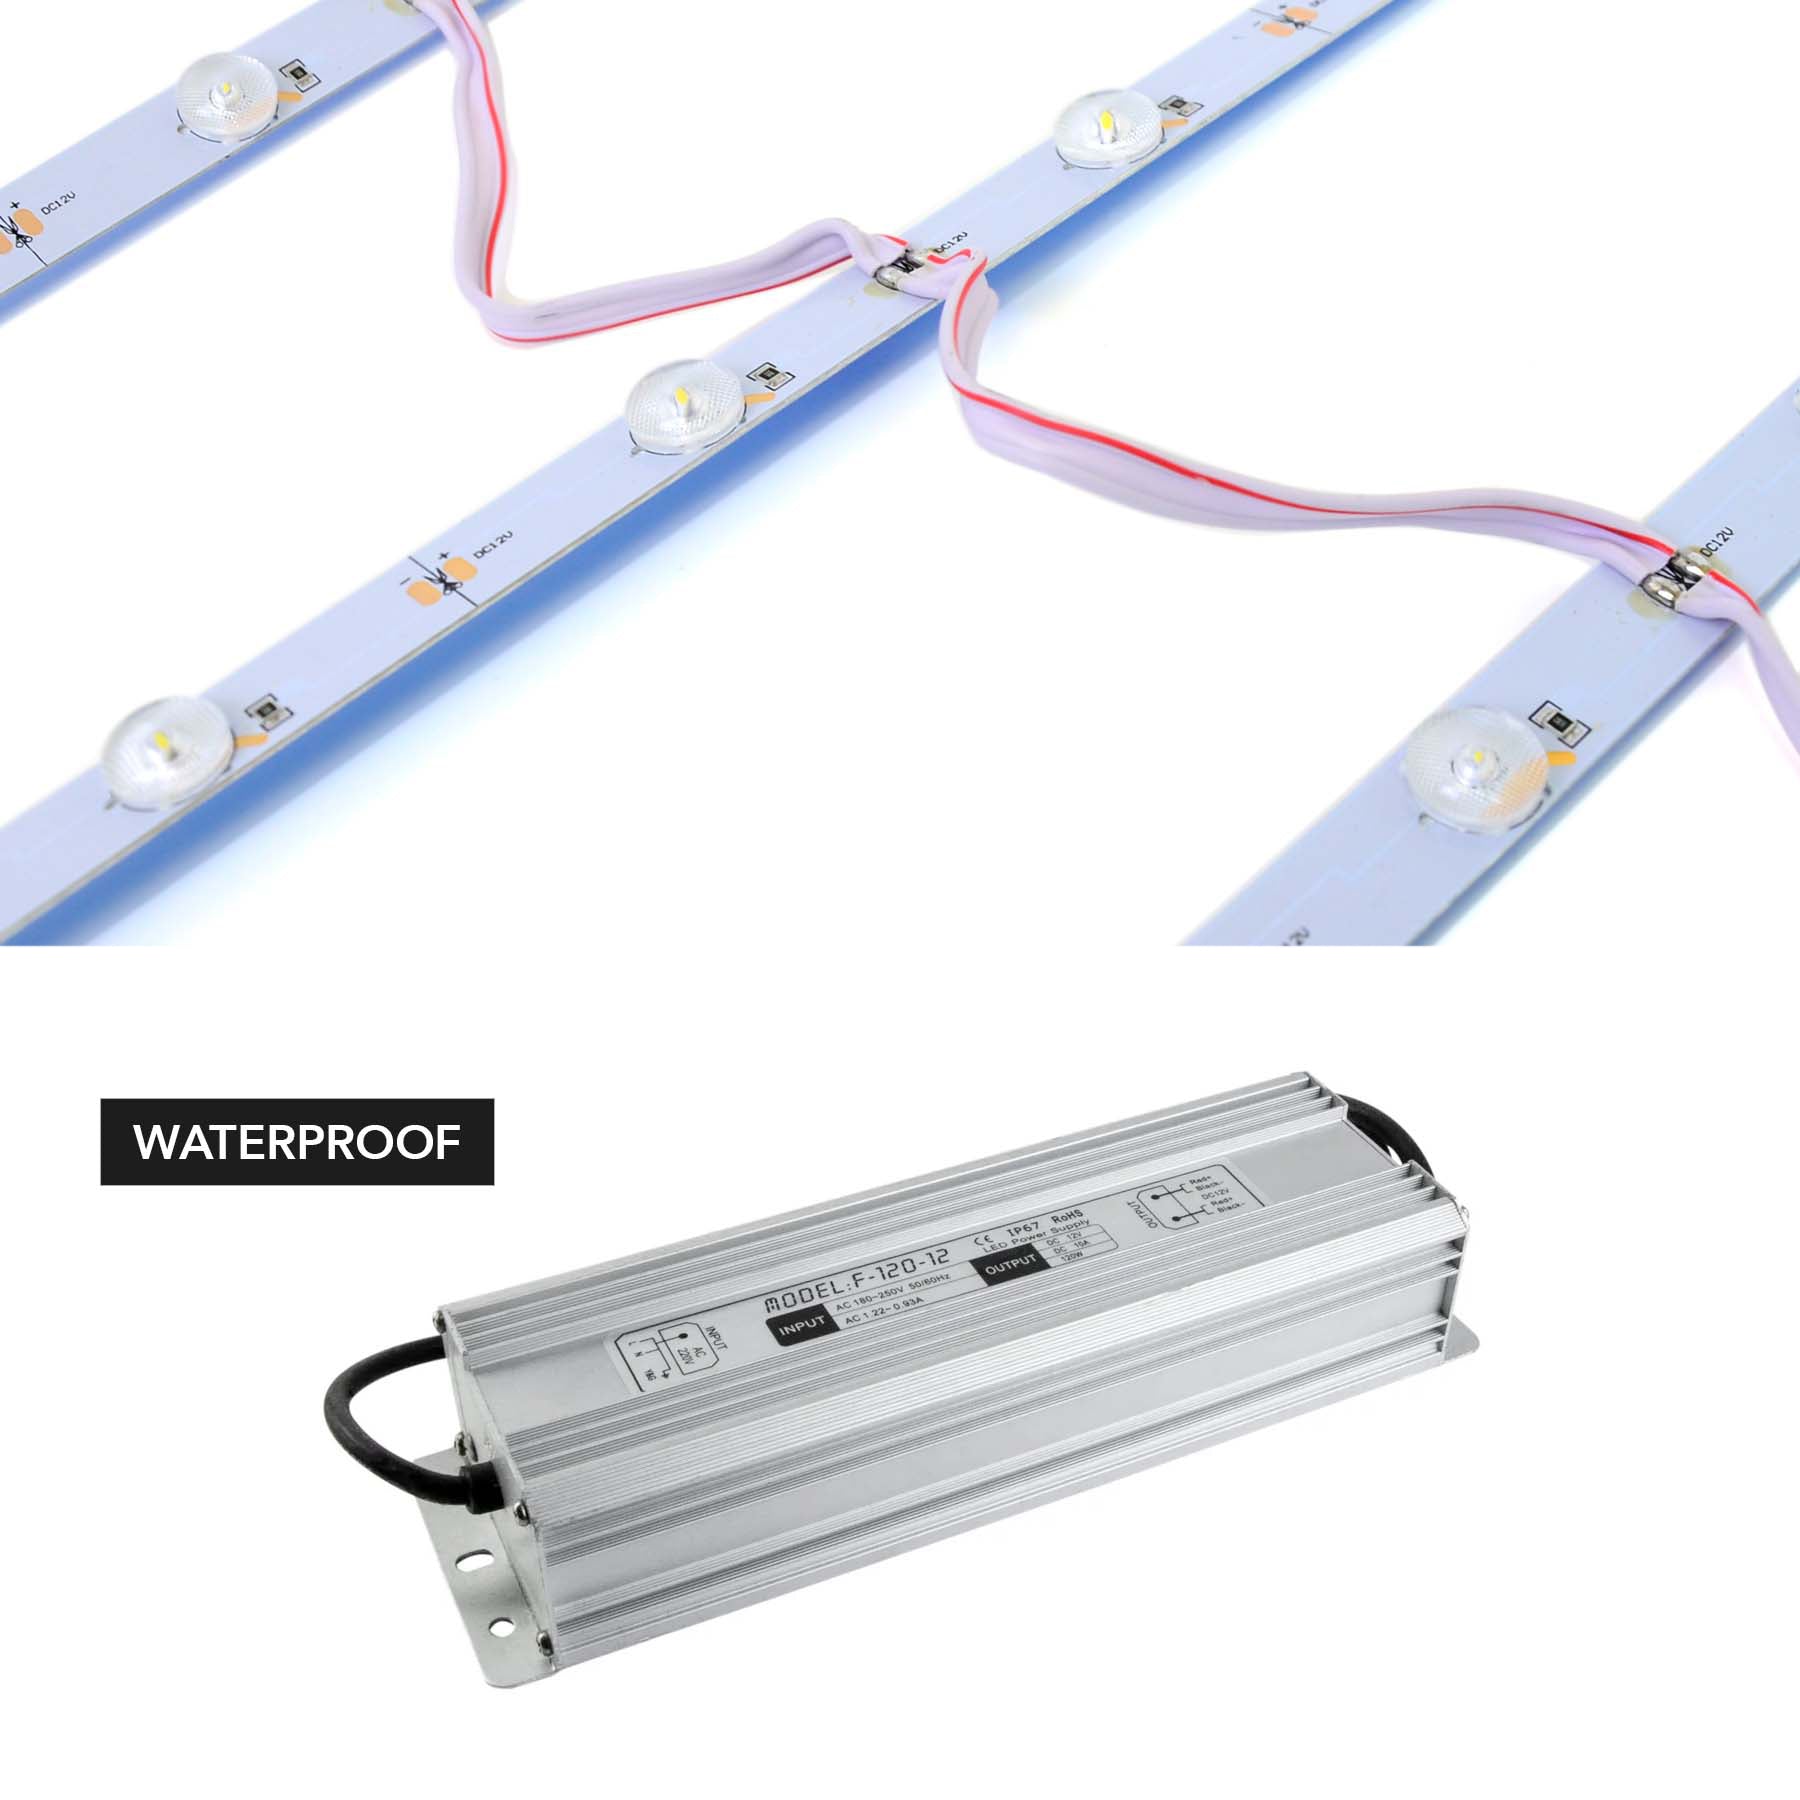 G.W.S LED Wholesale LED Module Lights IP20 (Non-Waterproof) / Cool White (6000K) / Full Kit With Waterproof LED Driver DC12V 3030 LED Sign Board Light Bar (10pcs)